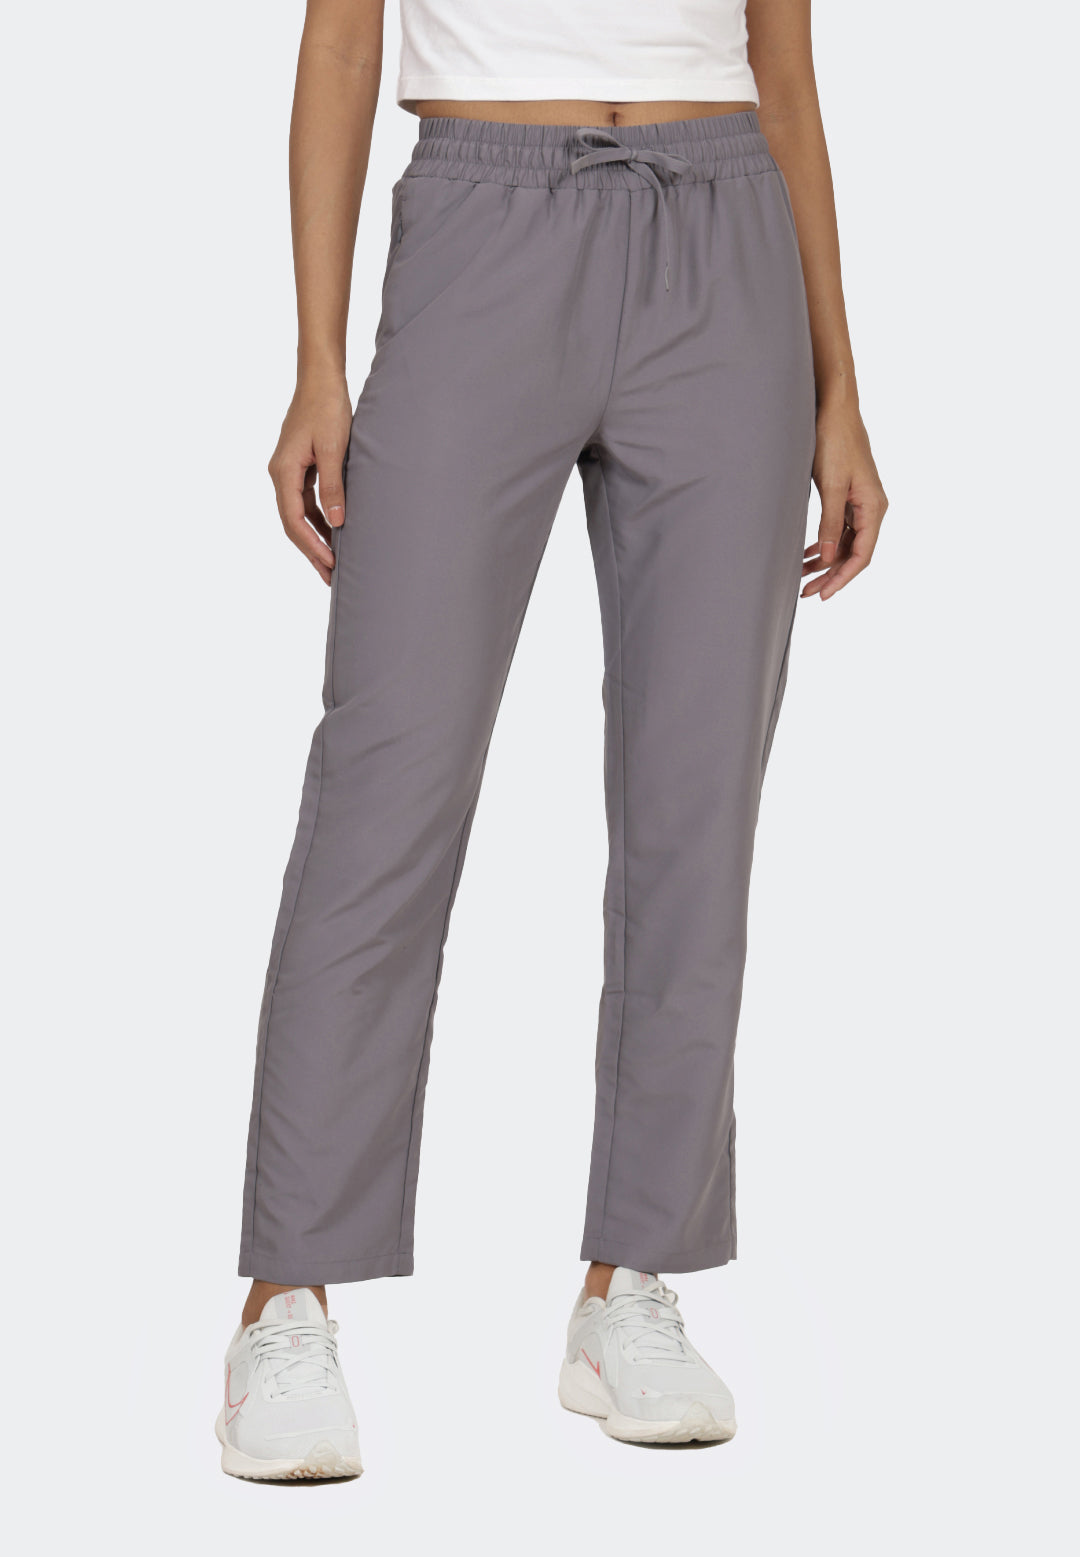 Buy Women's Polyester Pants Online from Blissclub